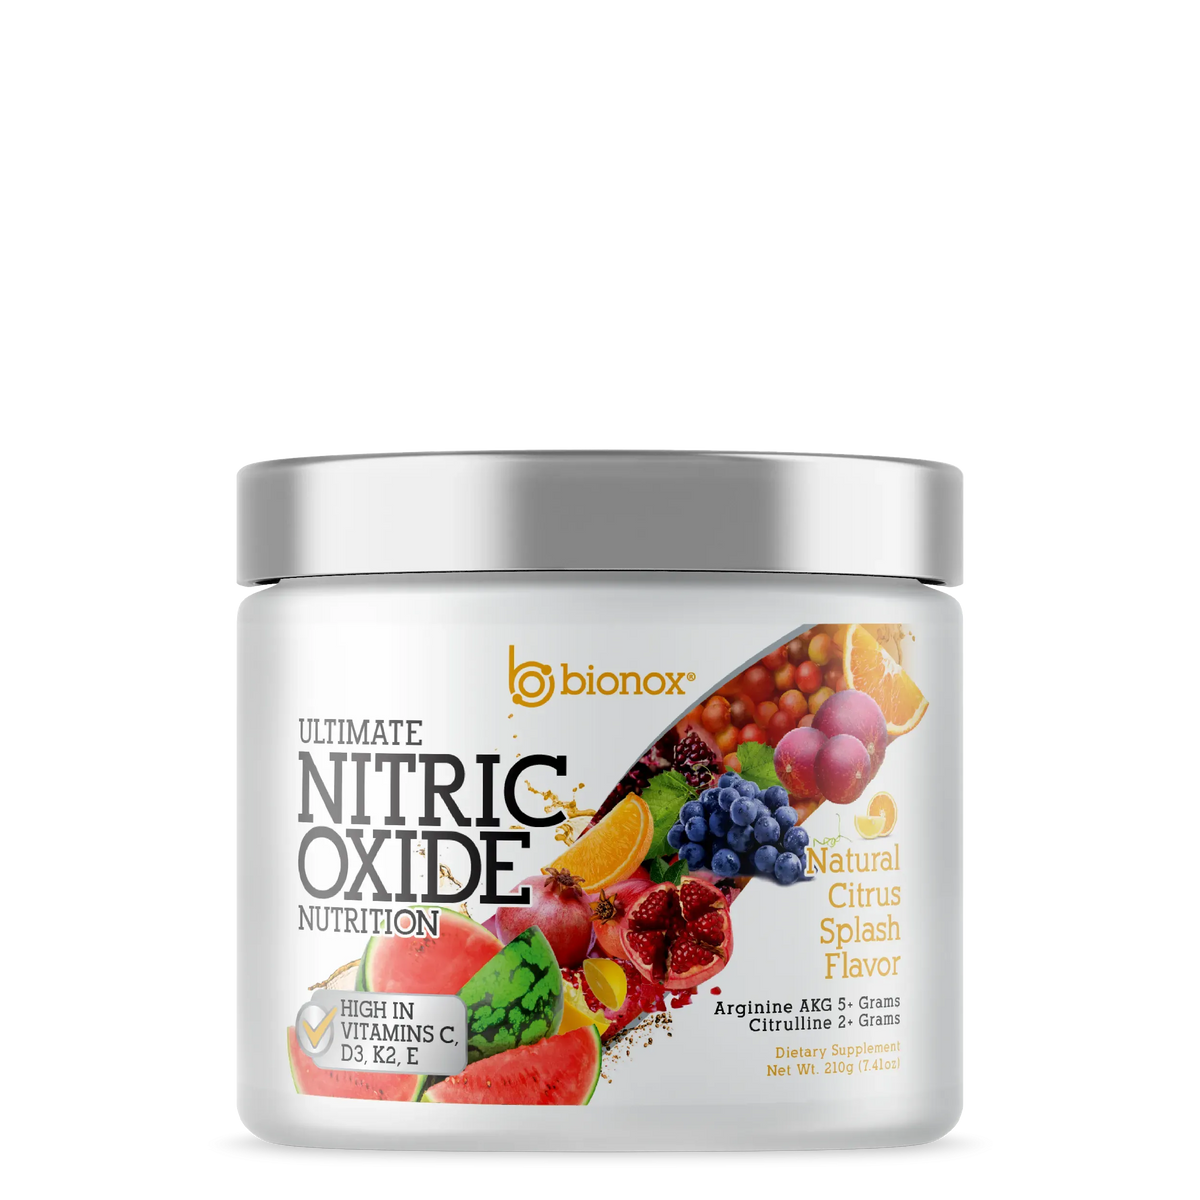 Ultimate Nitric Oxide Nutrition Citrus Splash Flavor - Small